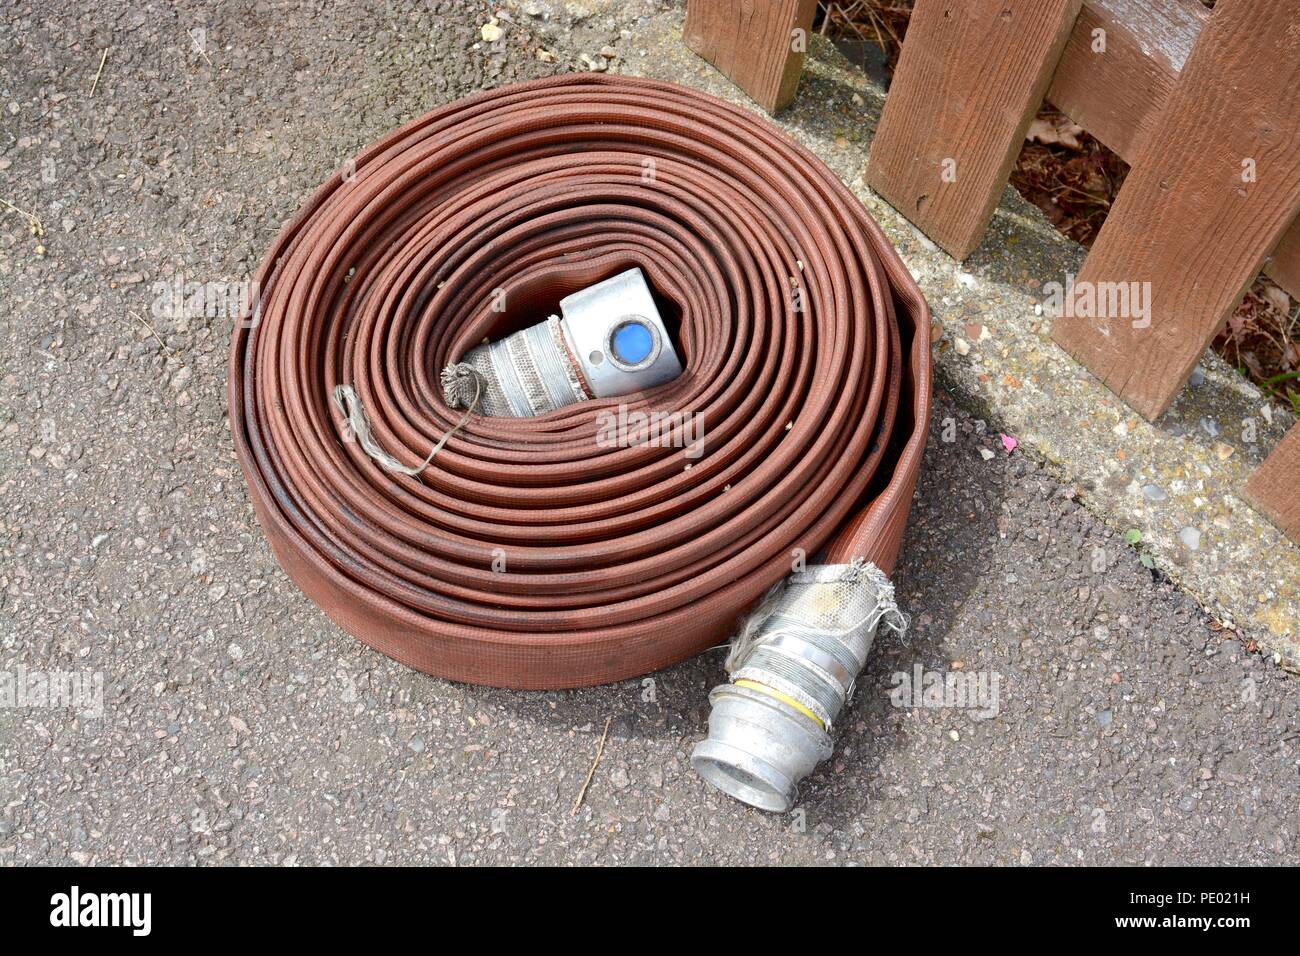 Fire hose length folded into a coil Stock Photo